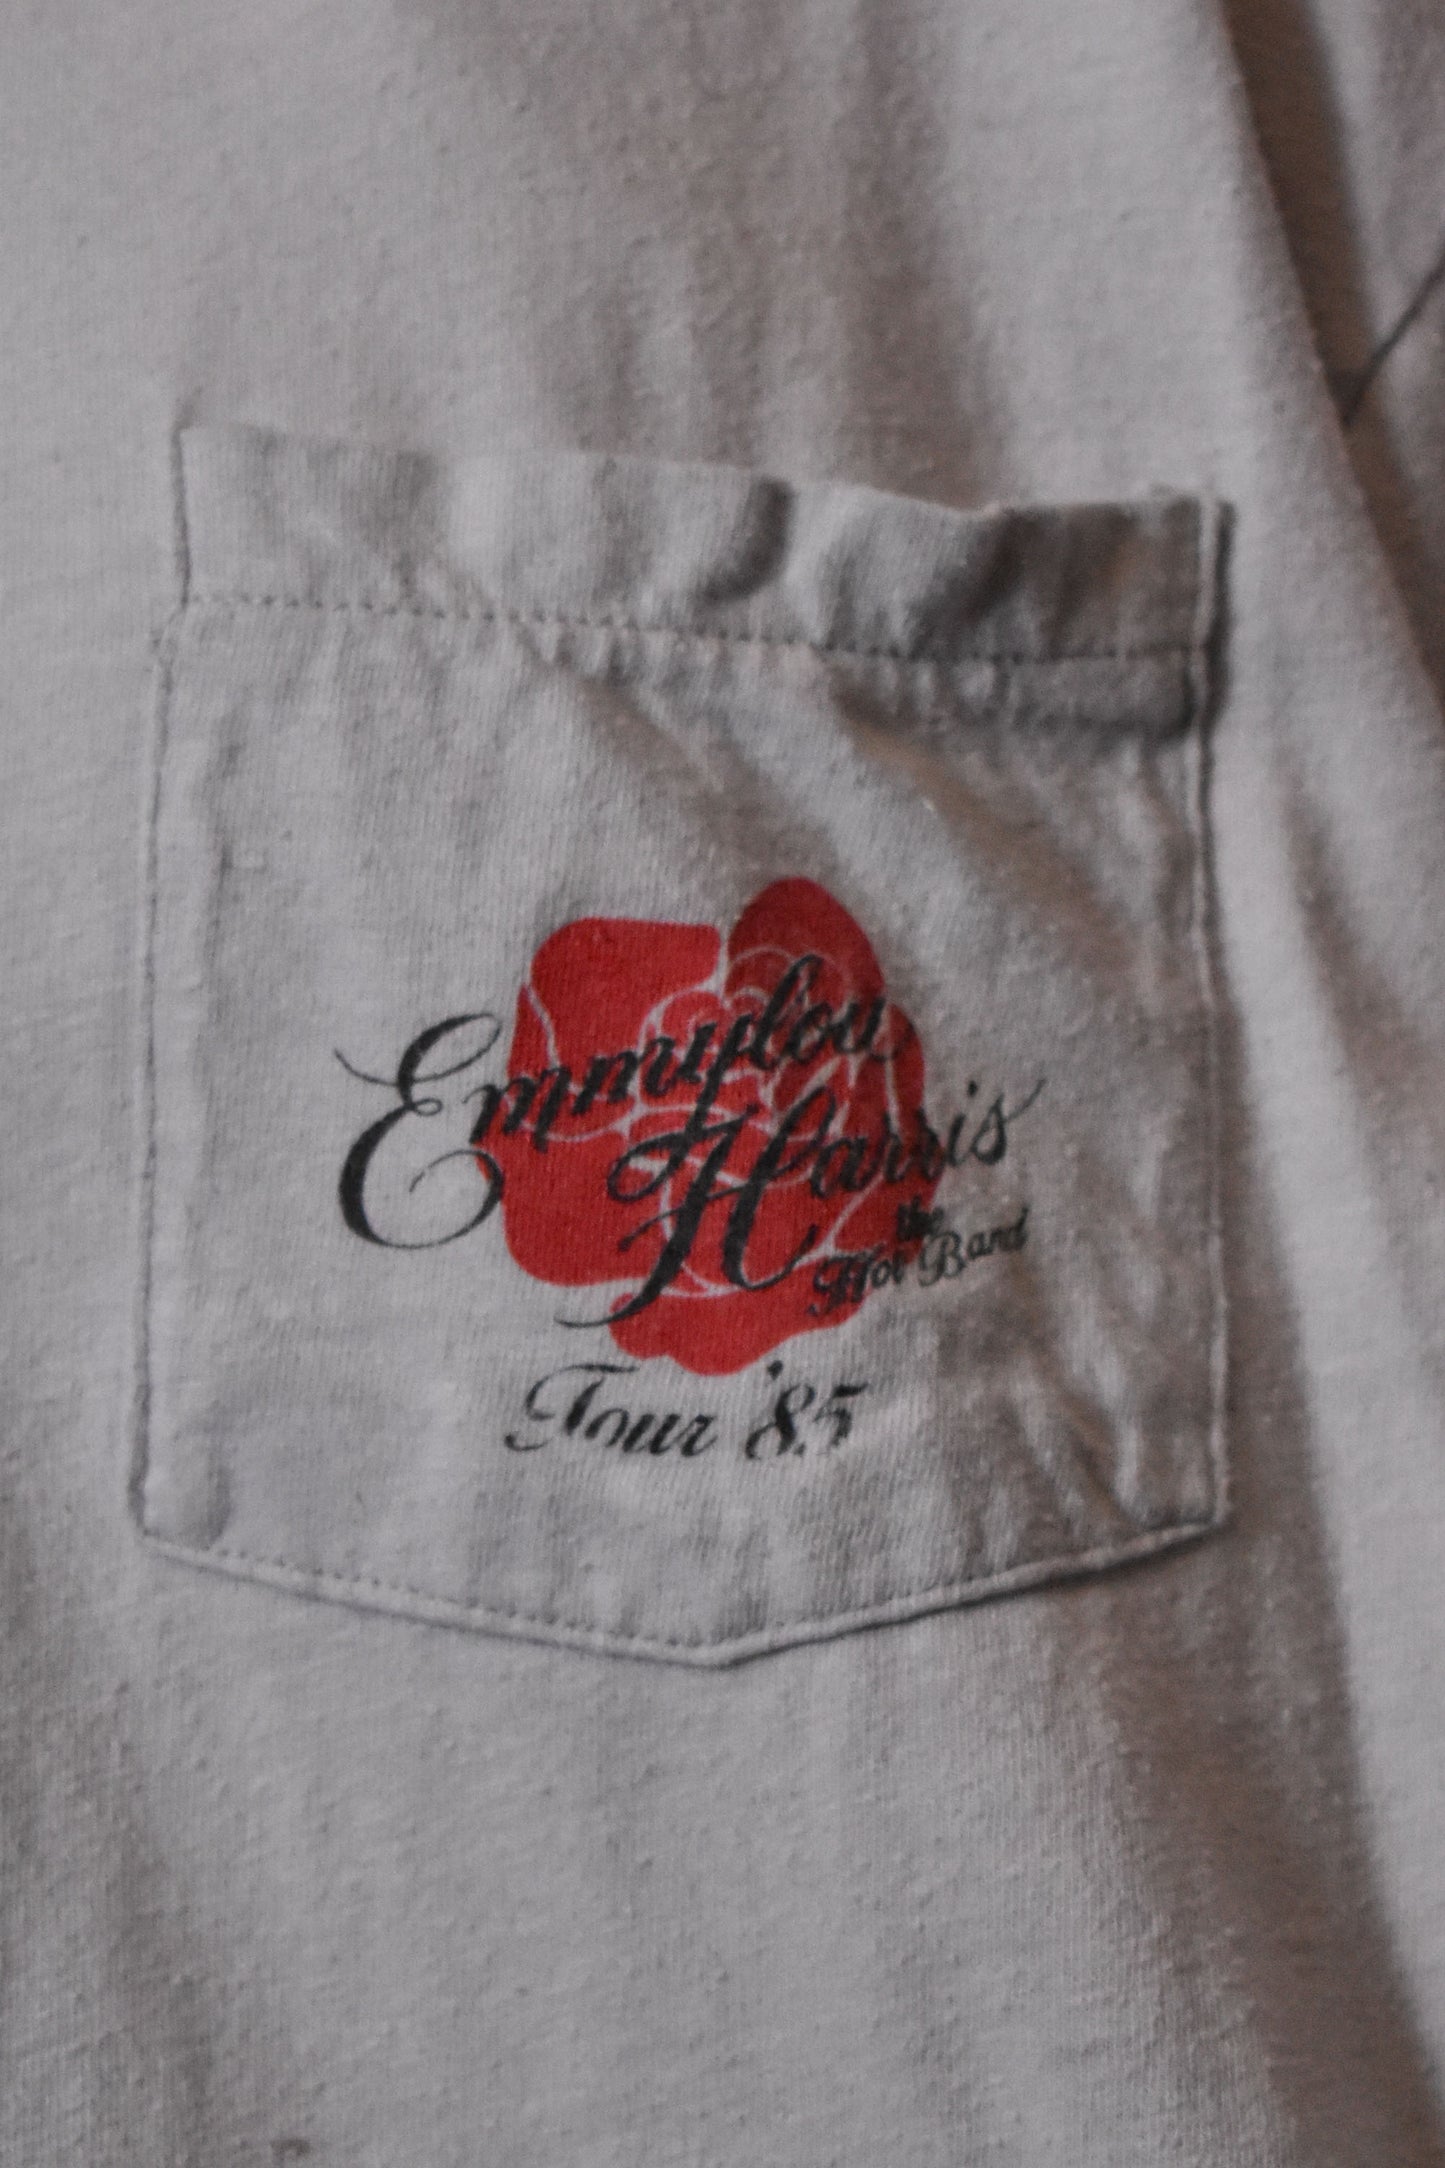 Vintage 1985 "Emmylou Harris" Tour T-shirt